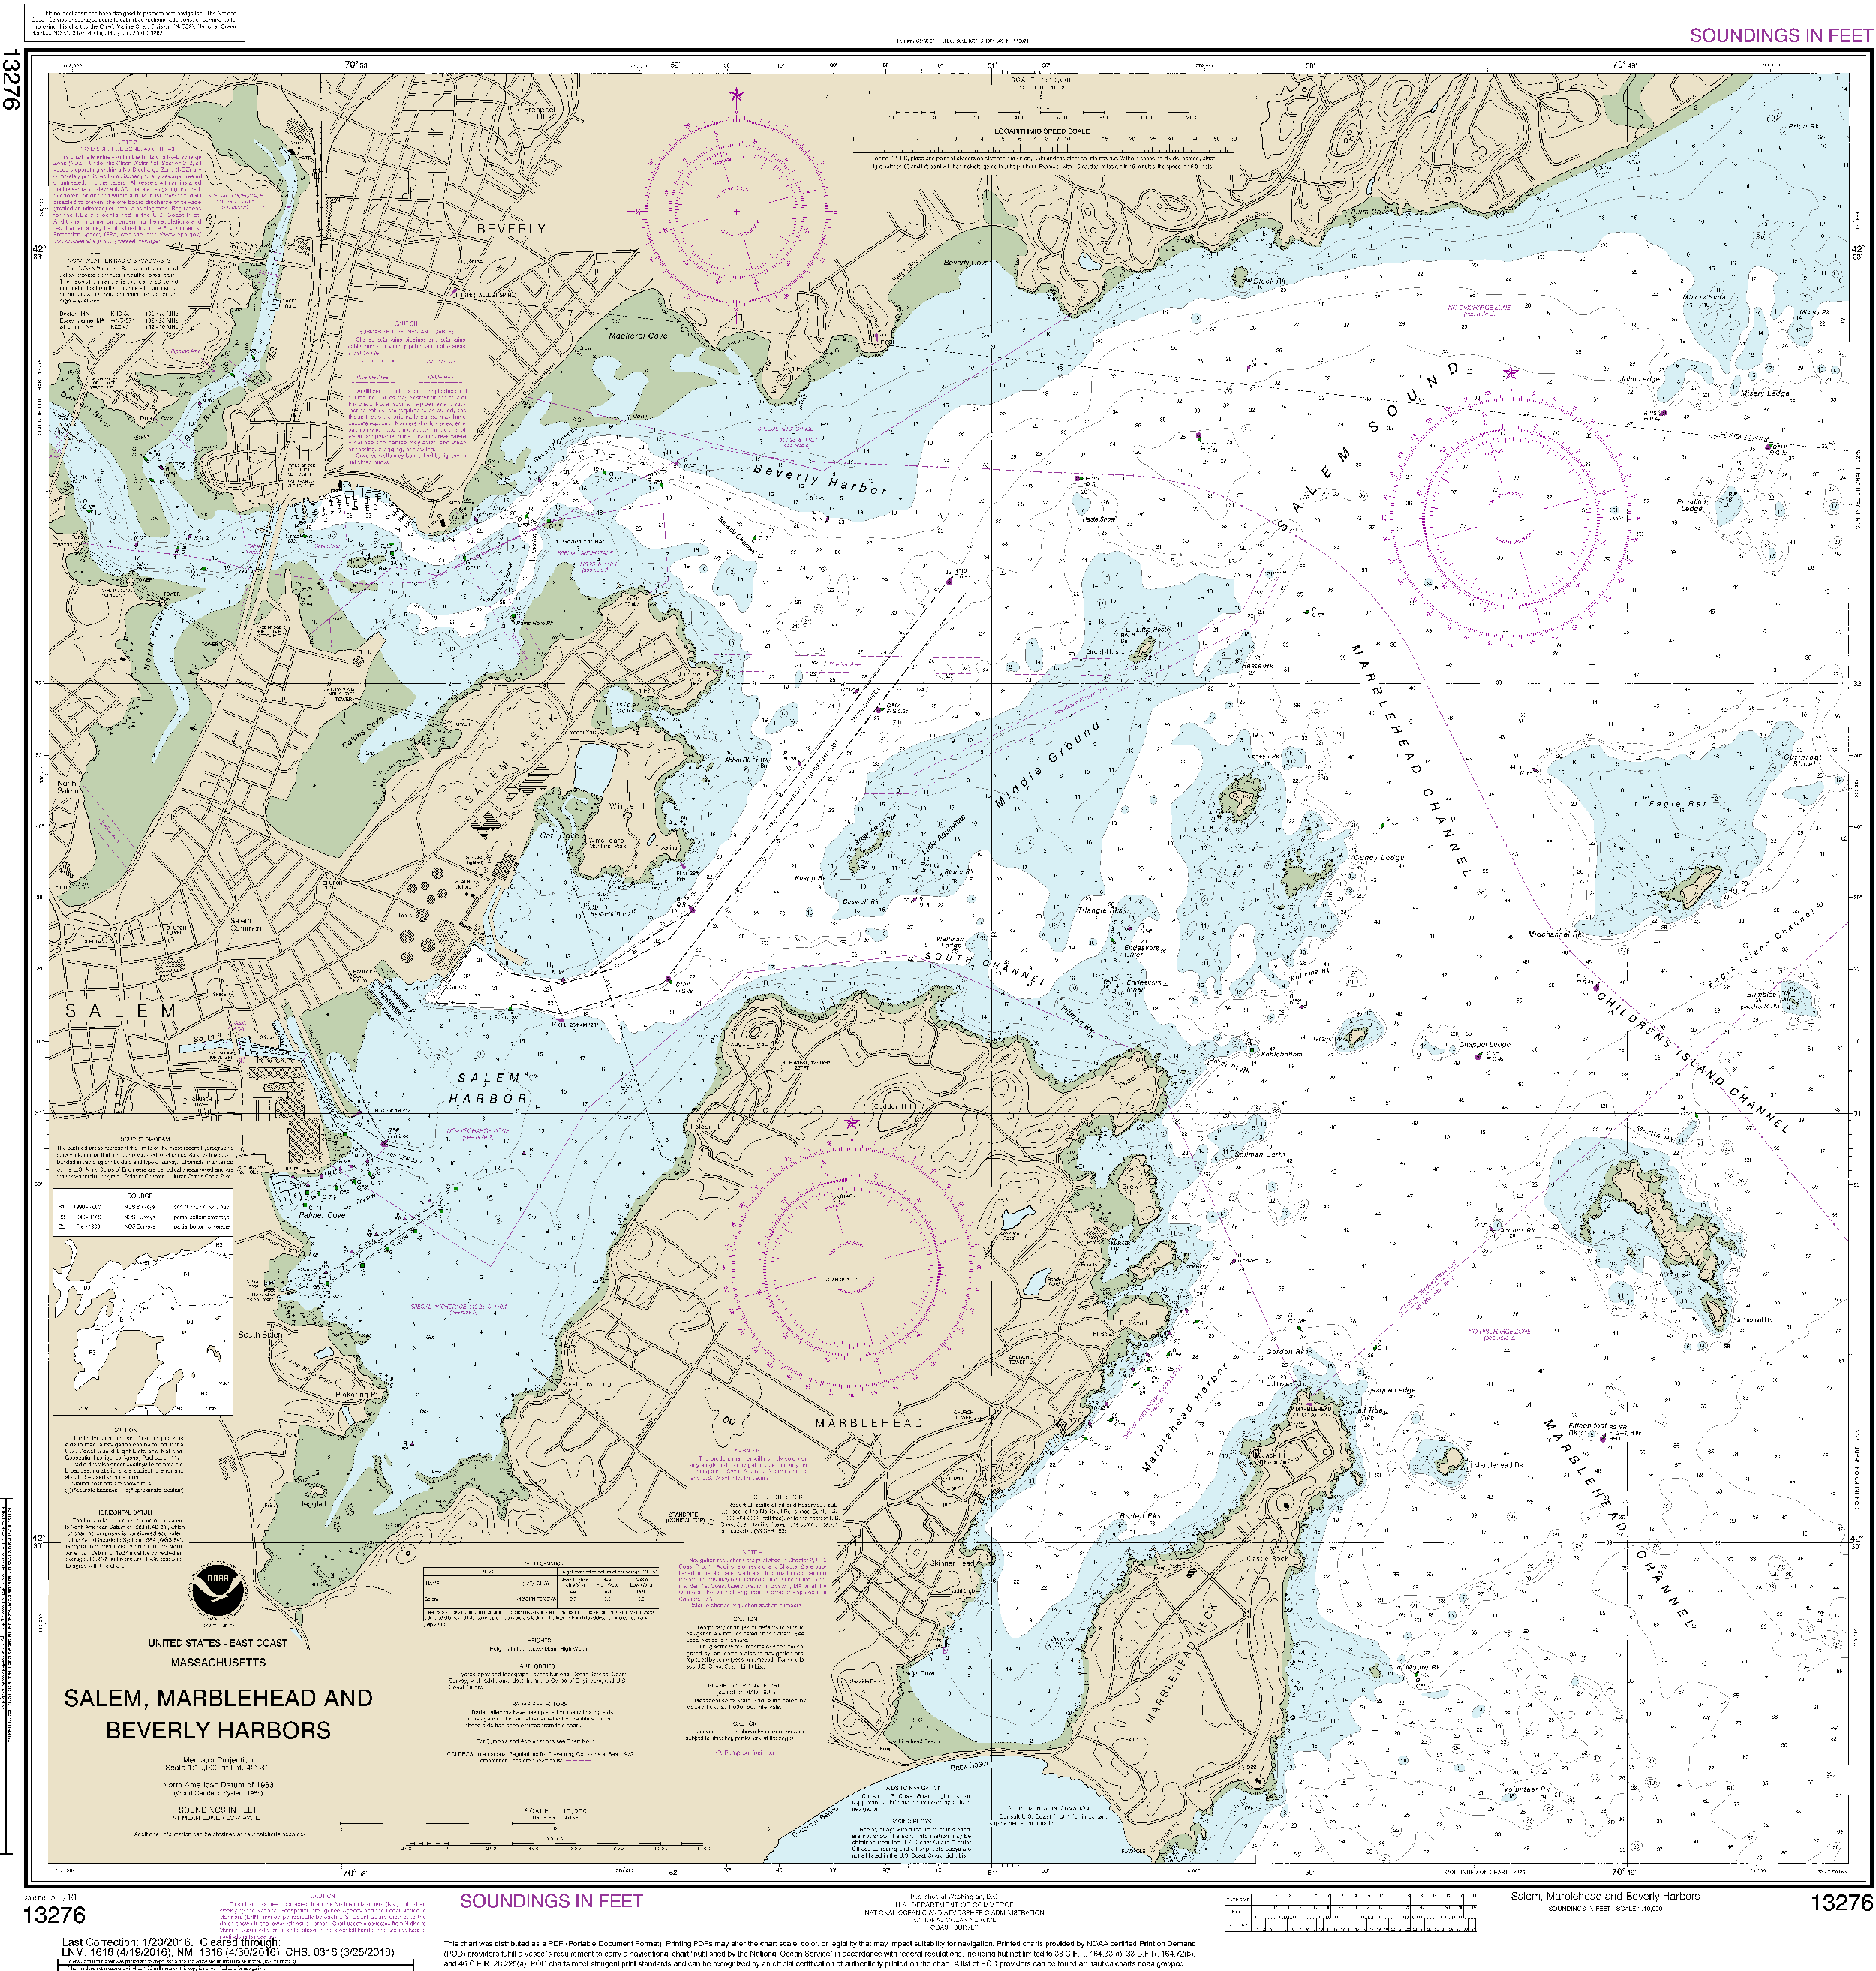 NOAA Nautical Chart 13276: Salem, Marblehead and Beverly Harbors